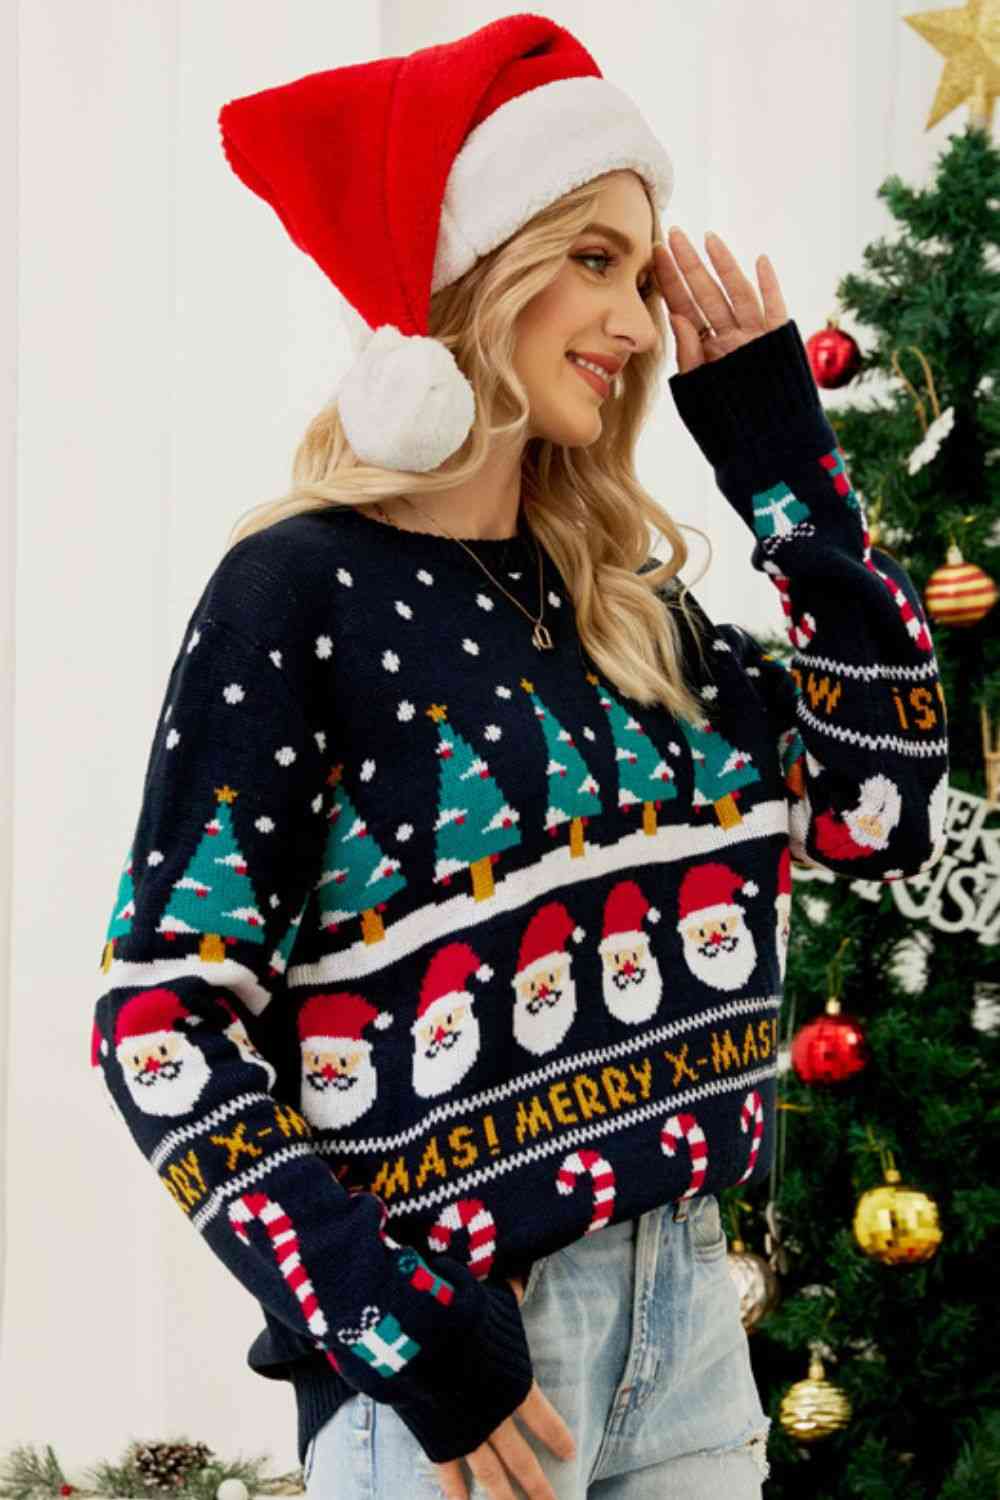 Merry Xmas Knit Festive Santa Candy Canes Trees Round Neck Holiday Sweater